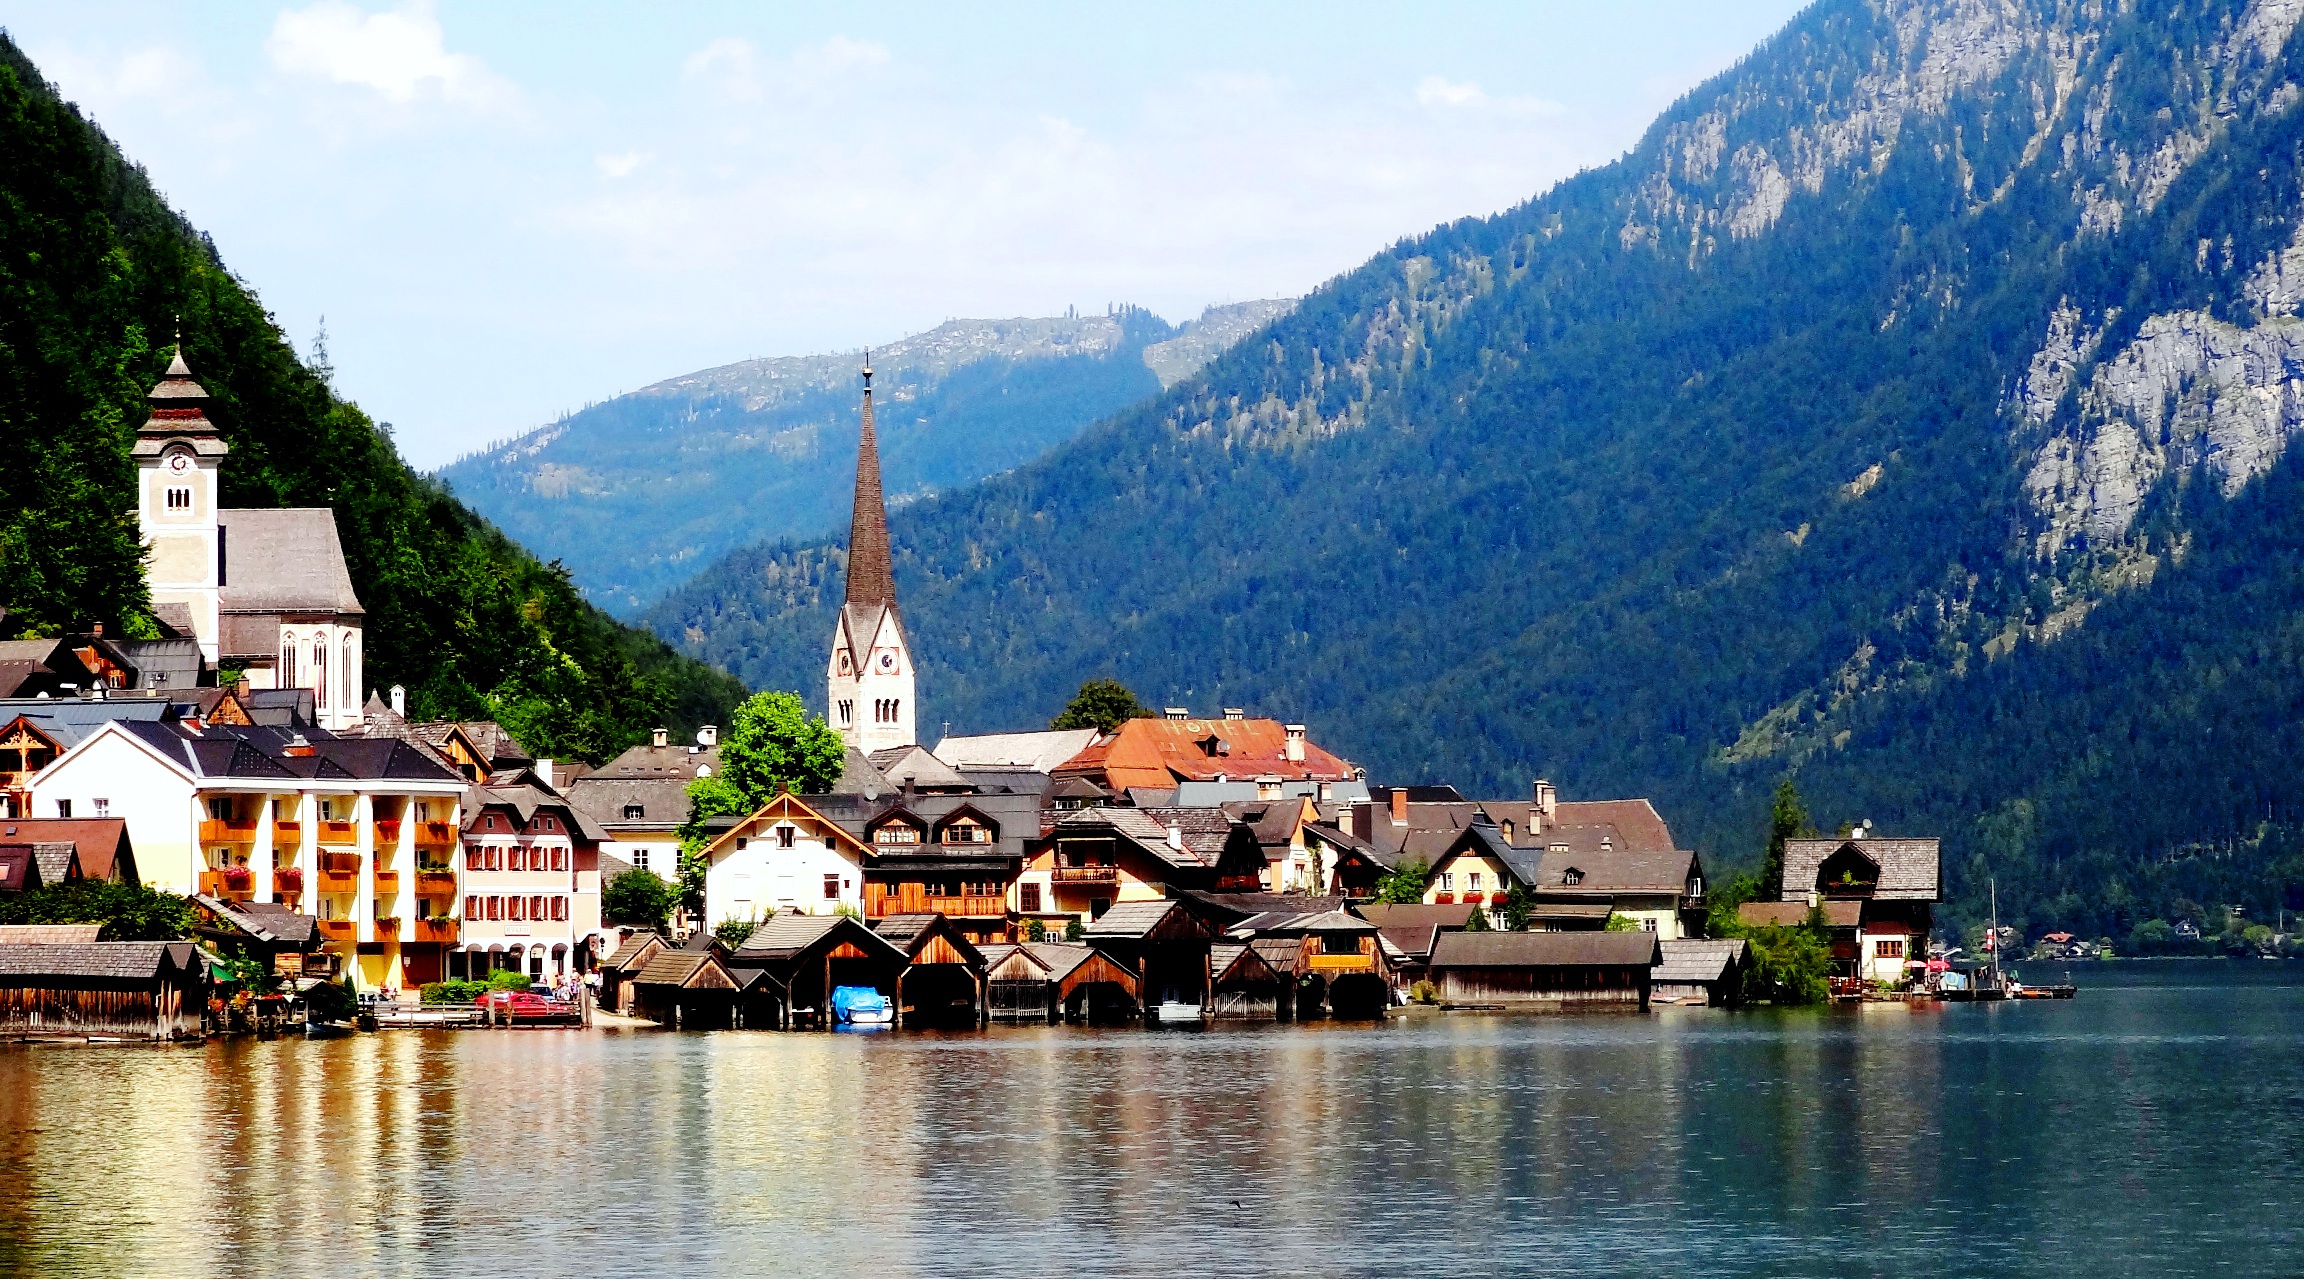 Salzburg Lake District - 76 Pristine Lakes In The Heart Of Austria